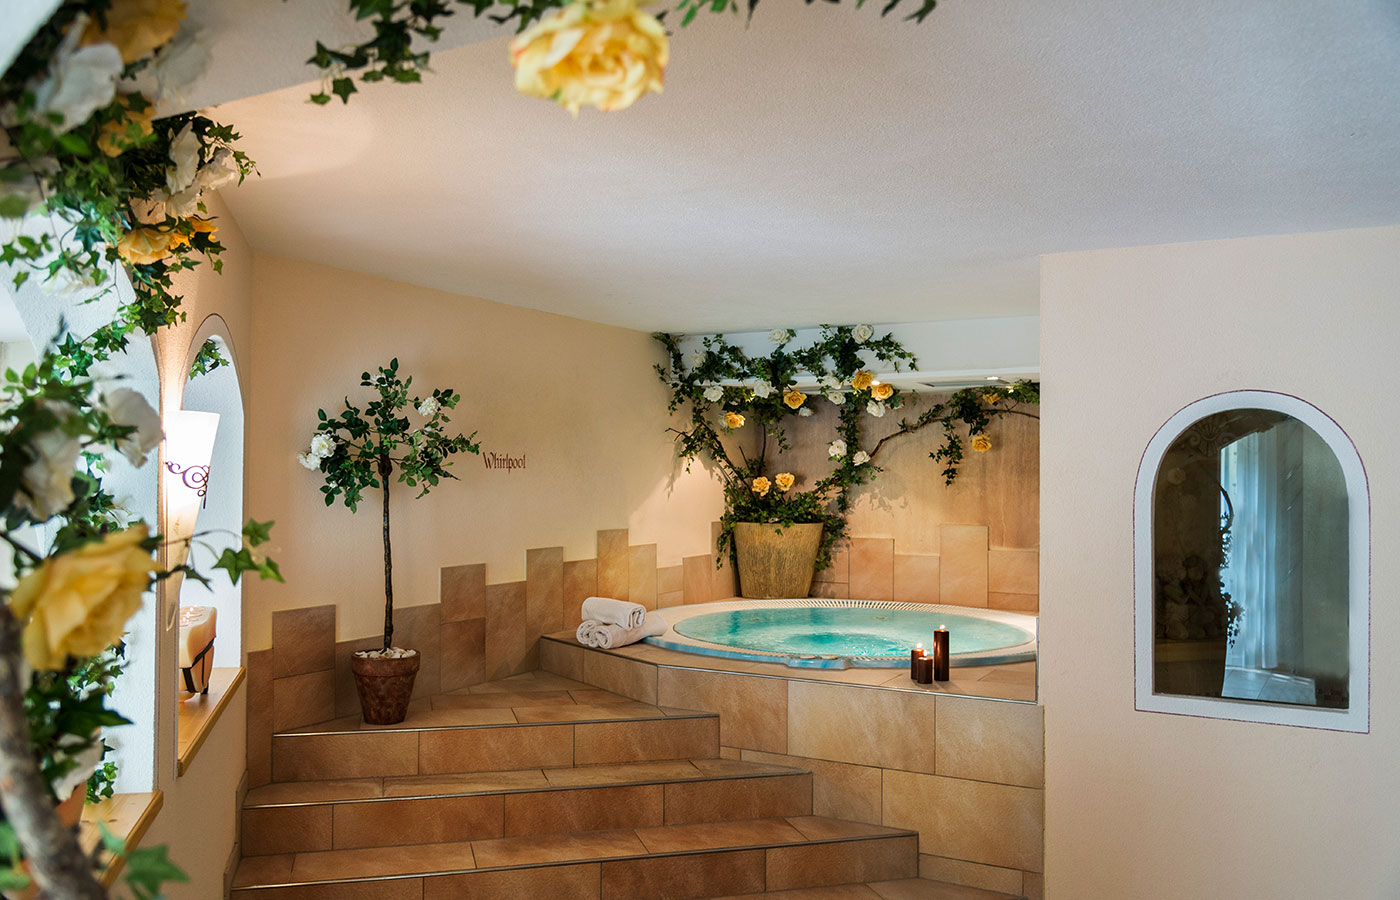 Area wellness dell'Hotel Waldheim: la vasca idromassaggio tonda